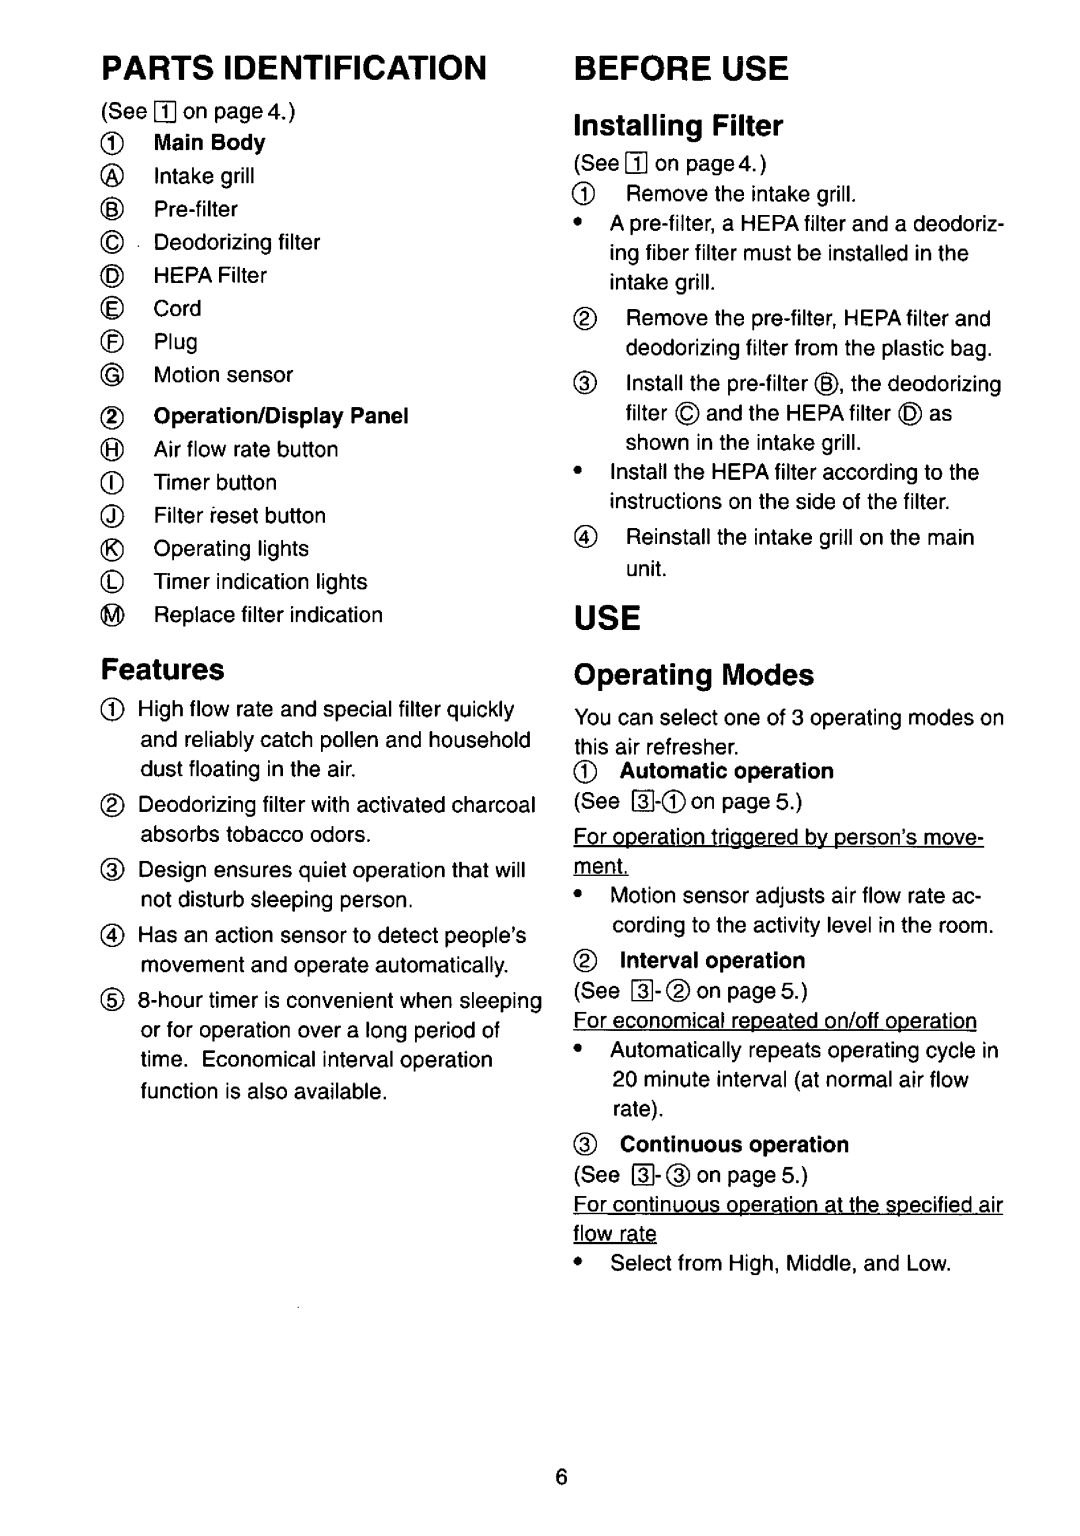 Panasonic EH366 manual 